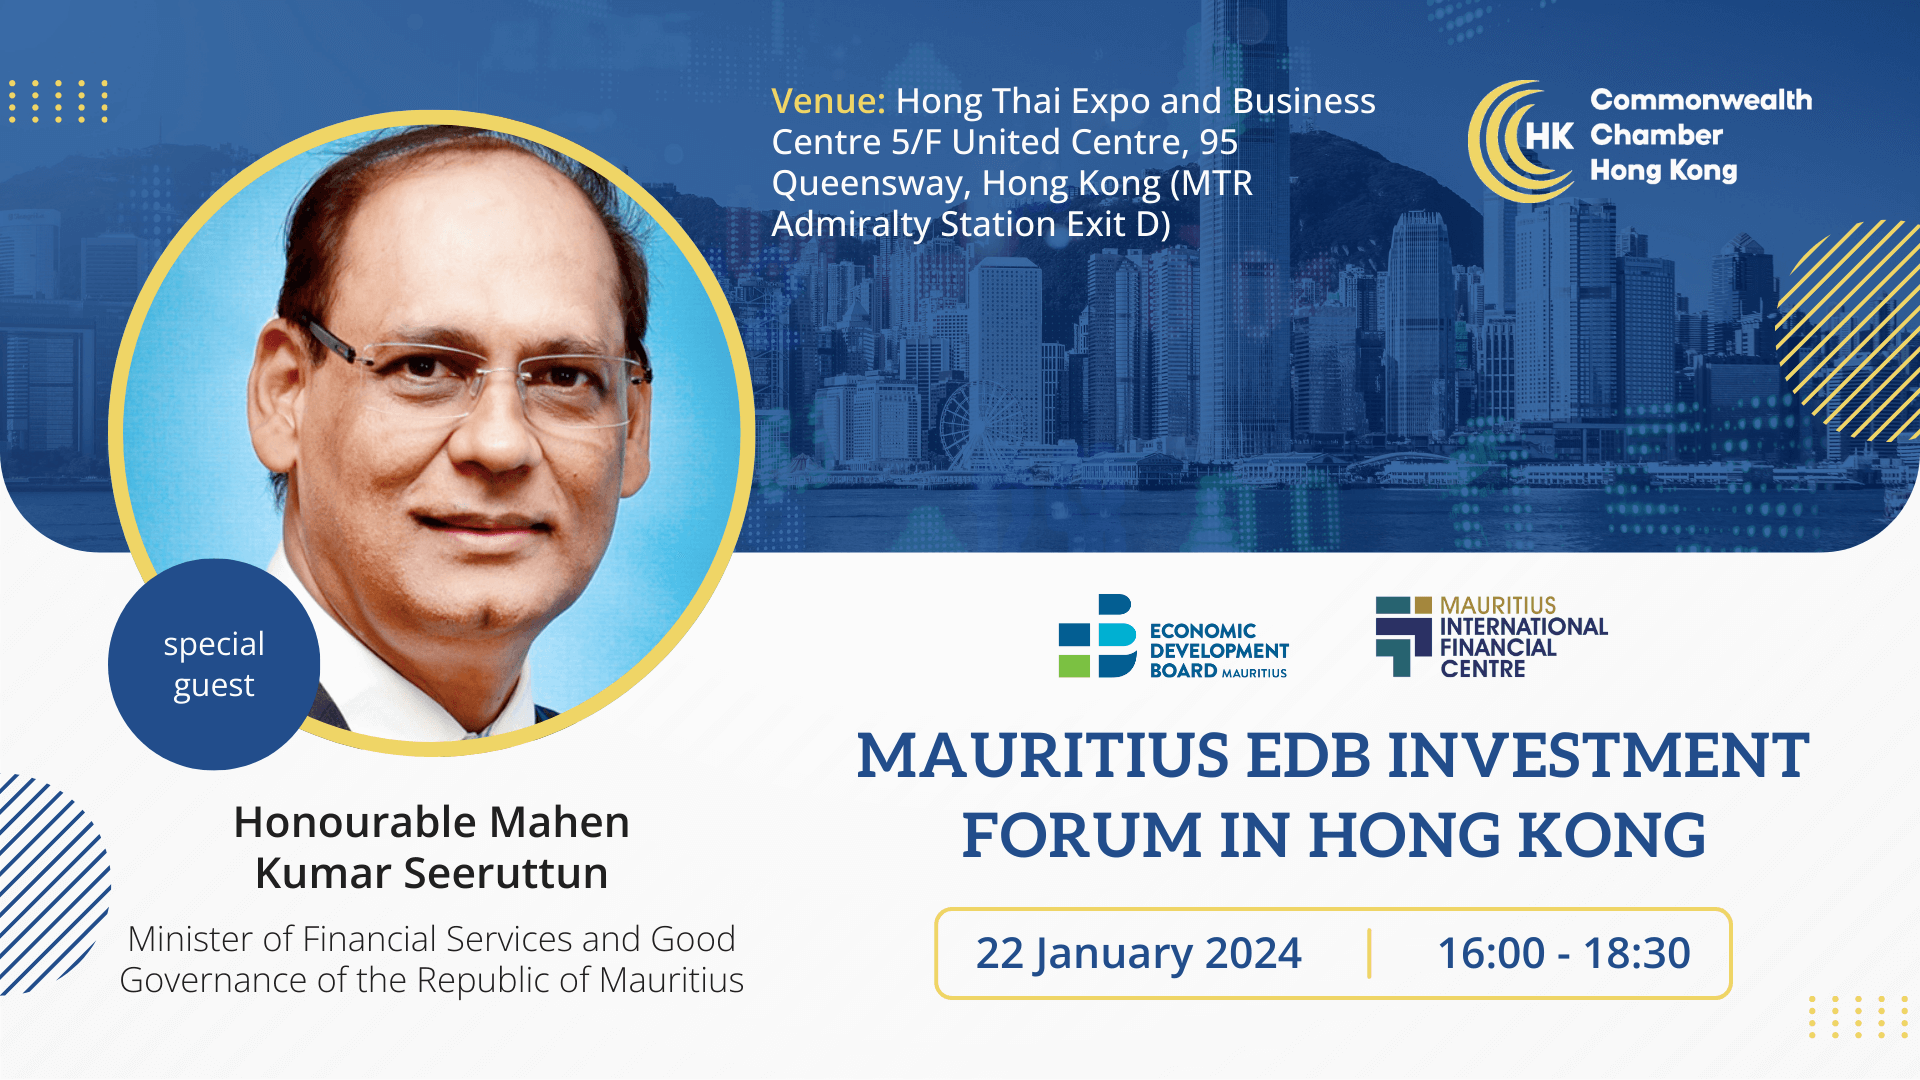 Mauritius EDB Investment Forum in Hong Kong